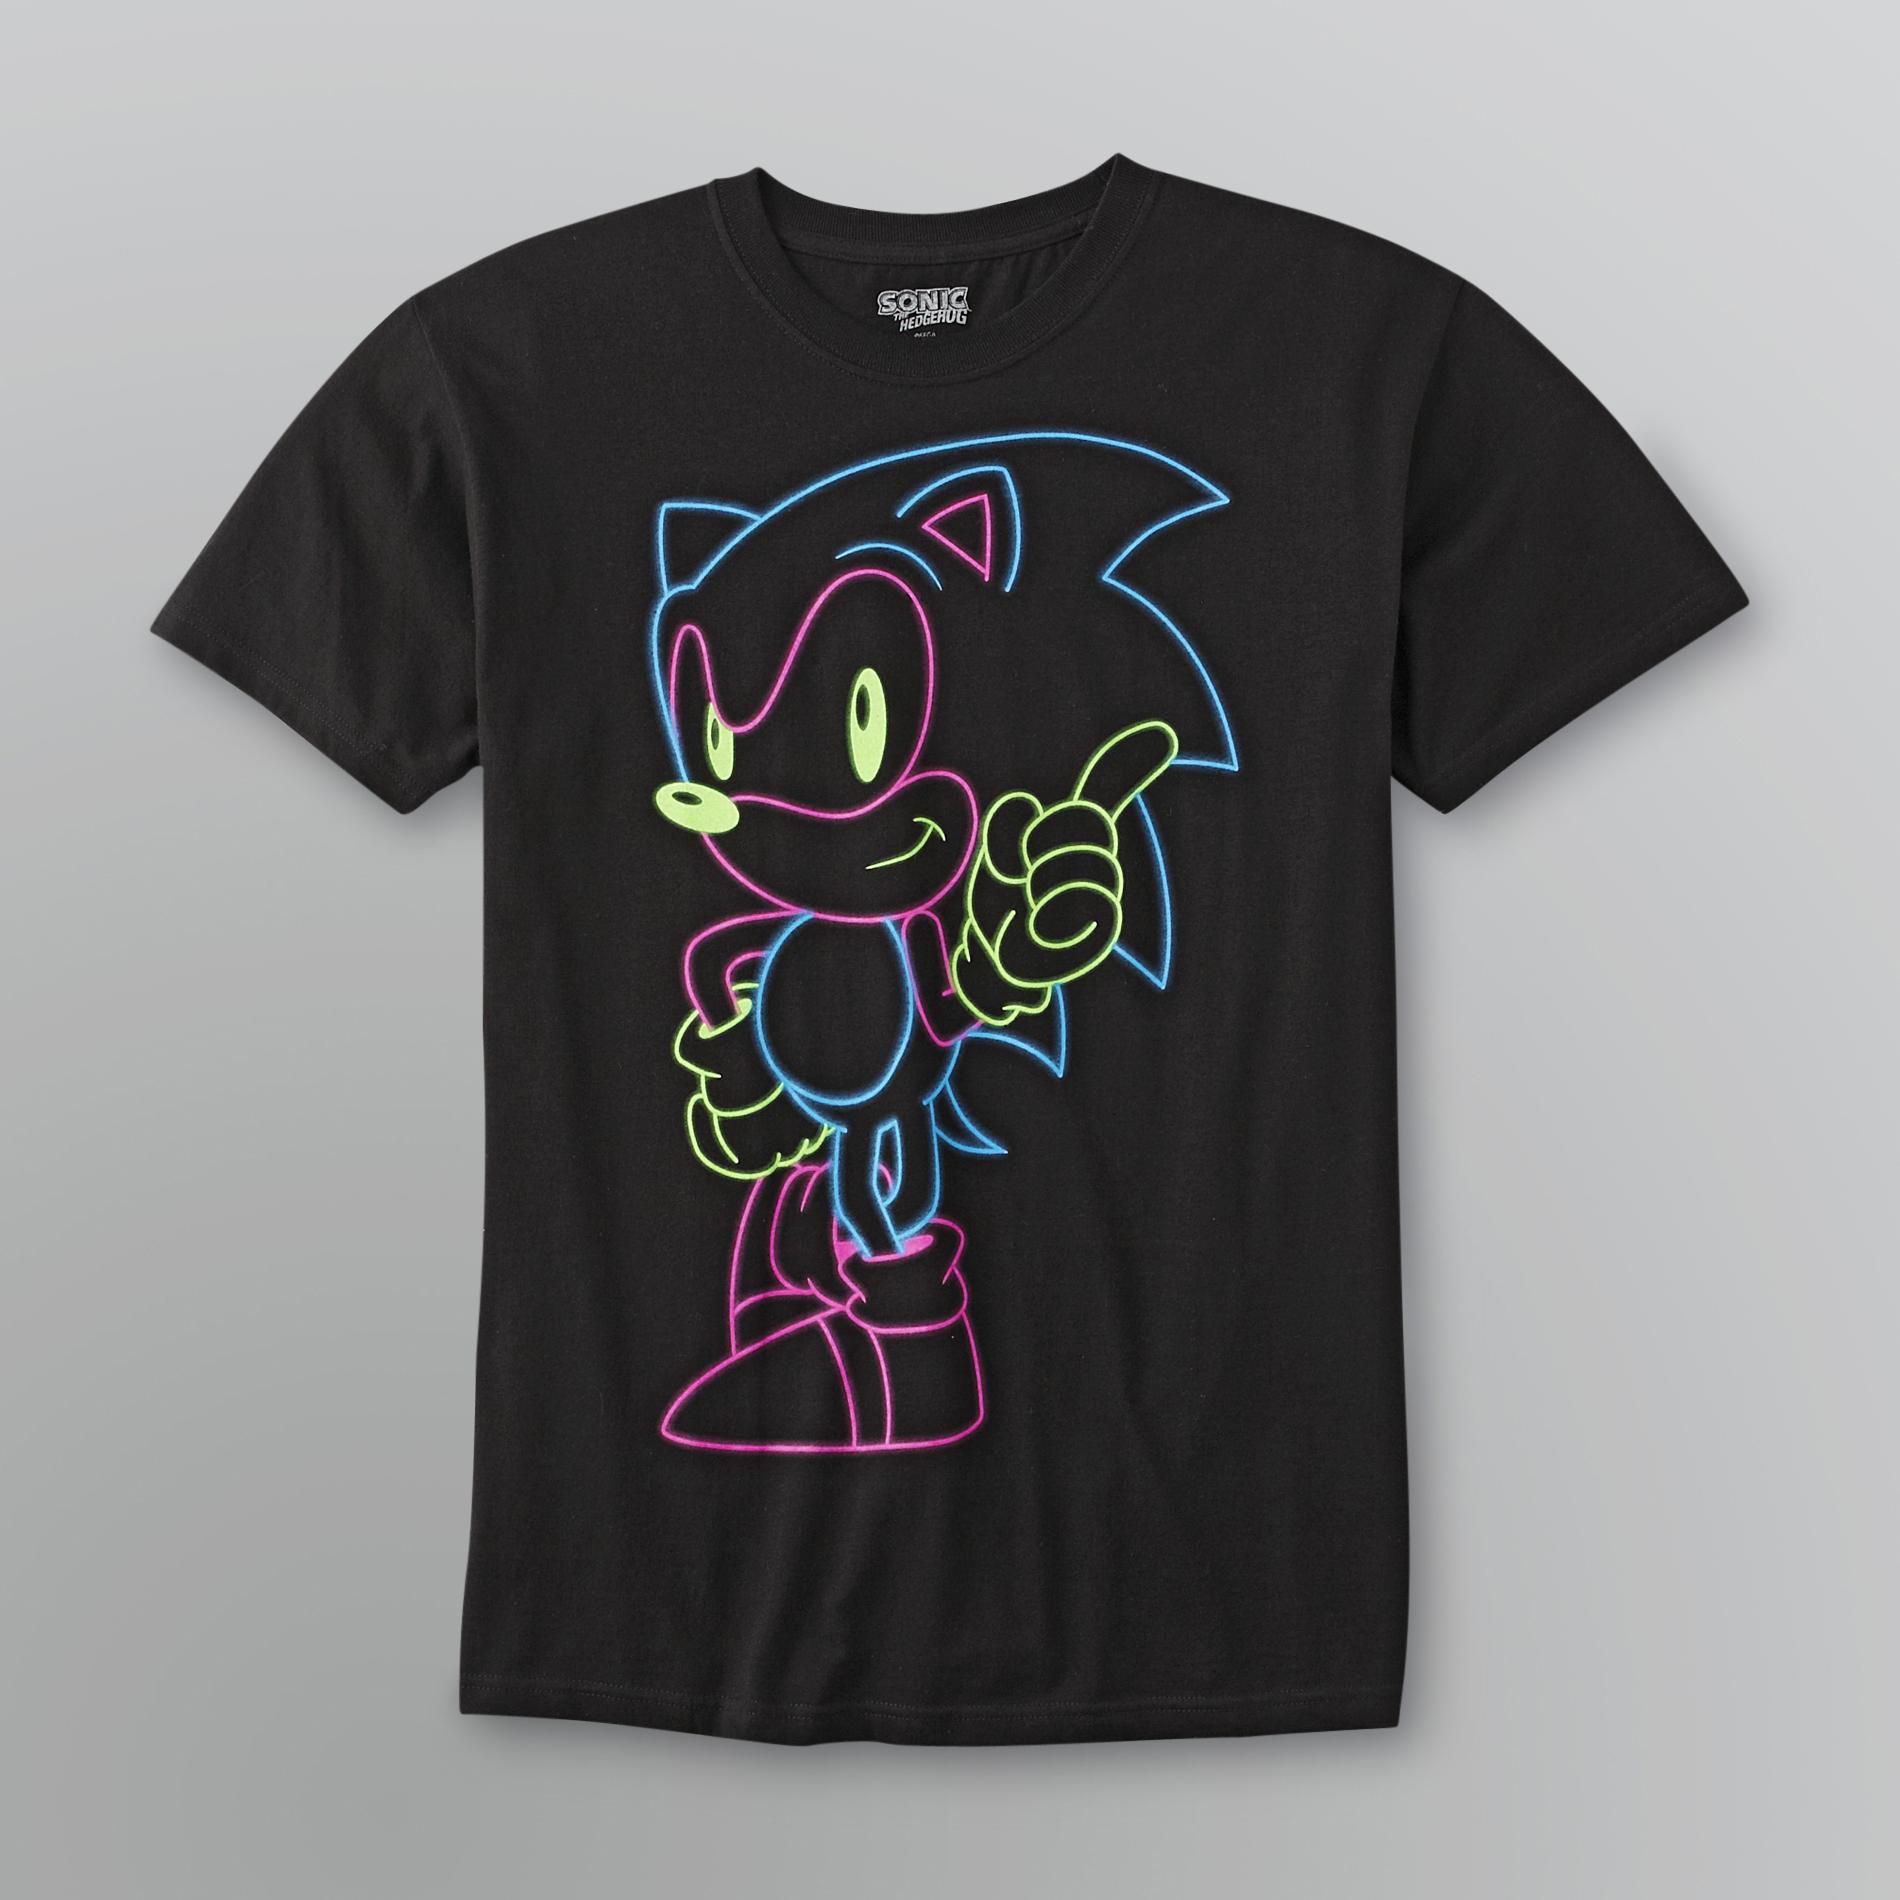 Young Men's Graphic T-Shirt - Neon Hedgehog